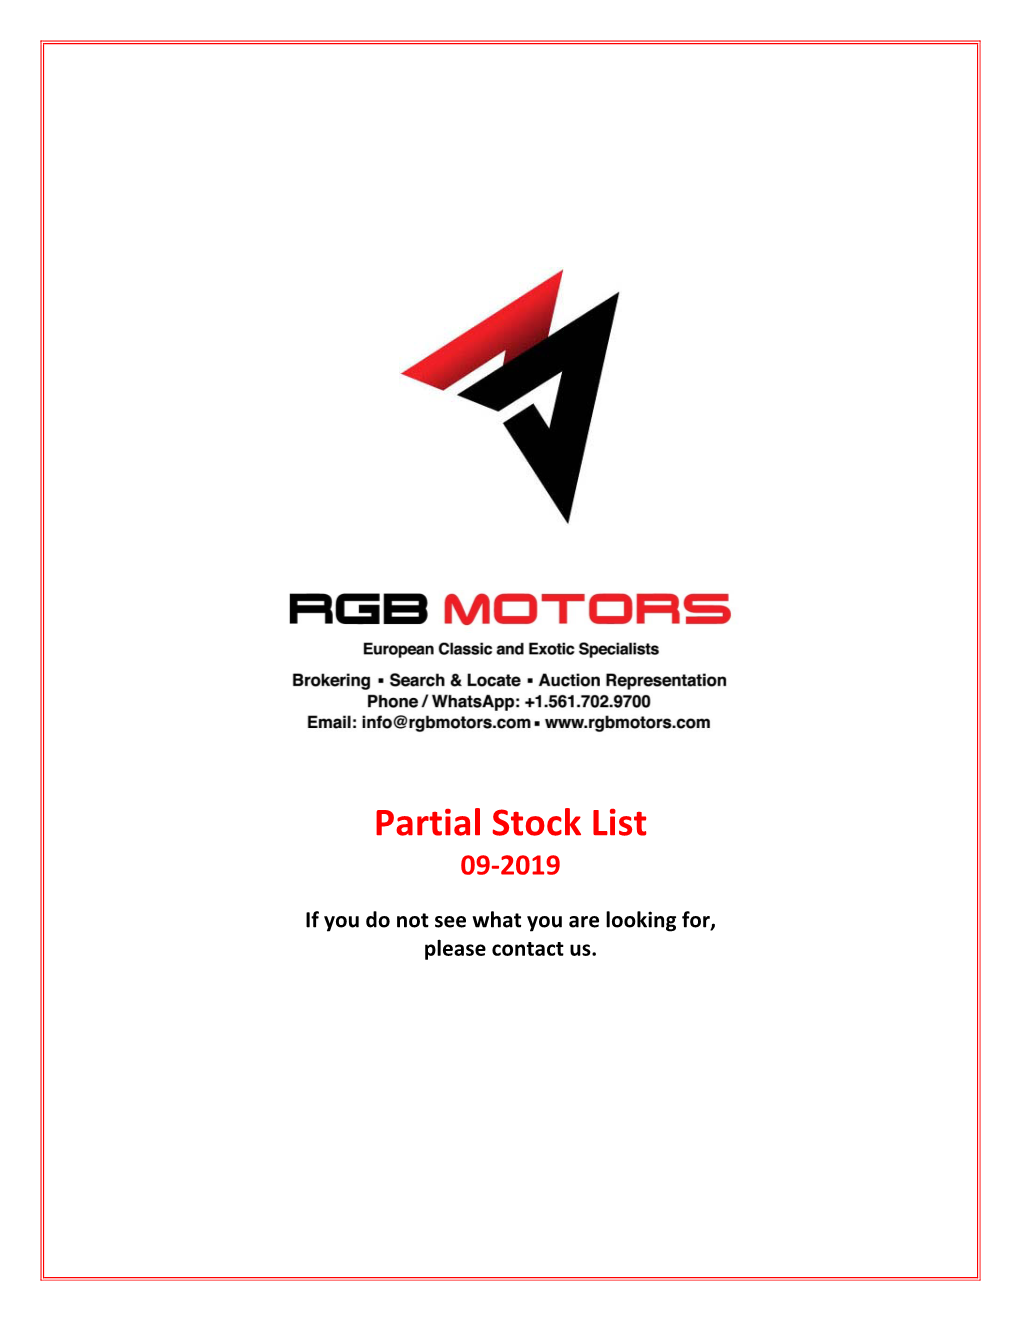 Partial Stock List 09-2019